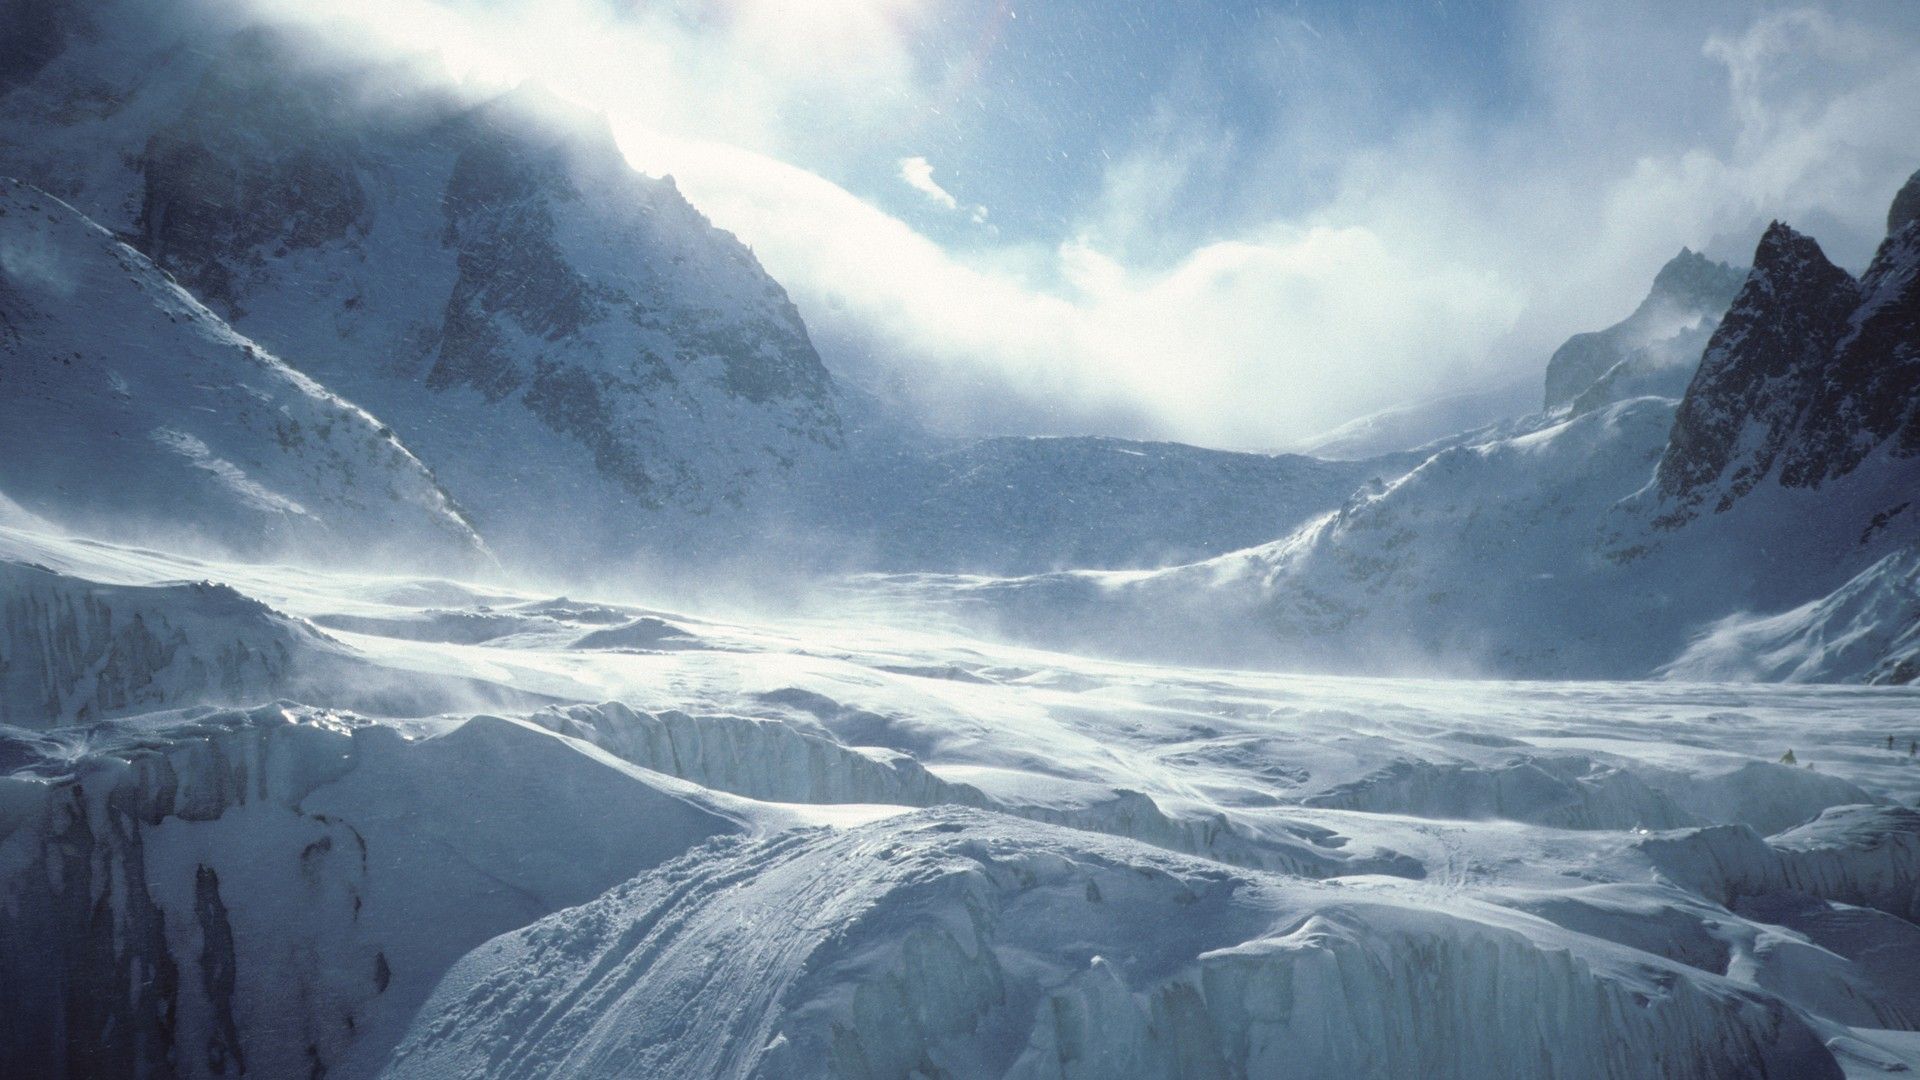 Ice Mountains backgrounds Wallpaper | eslam | Pinterest | Mountain ...